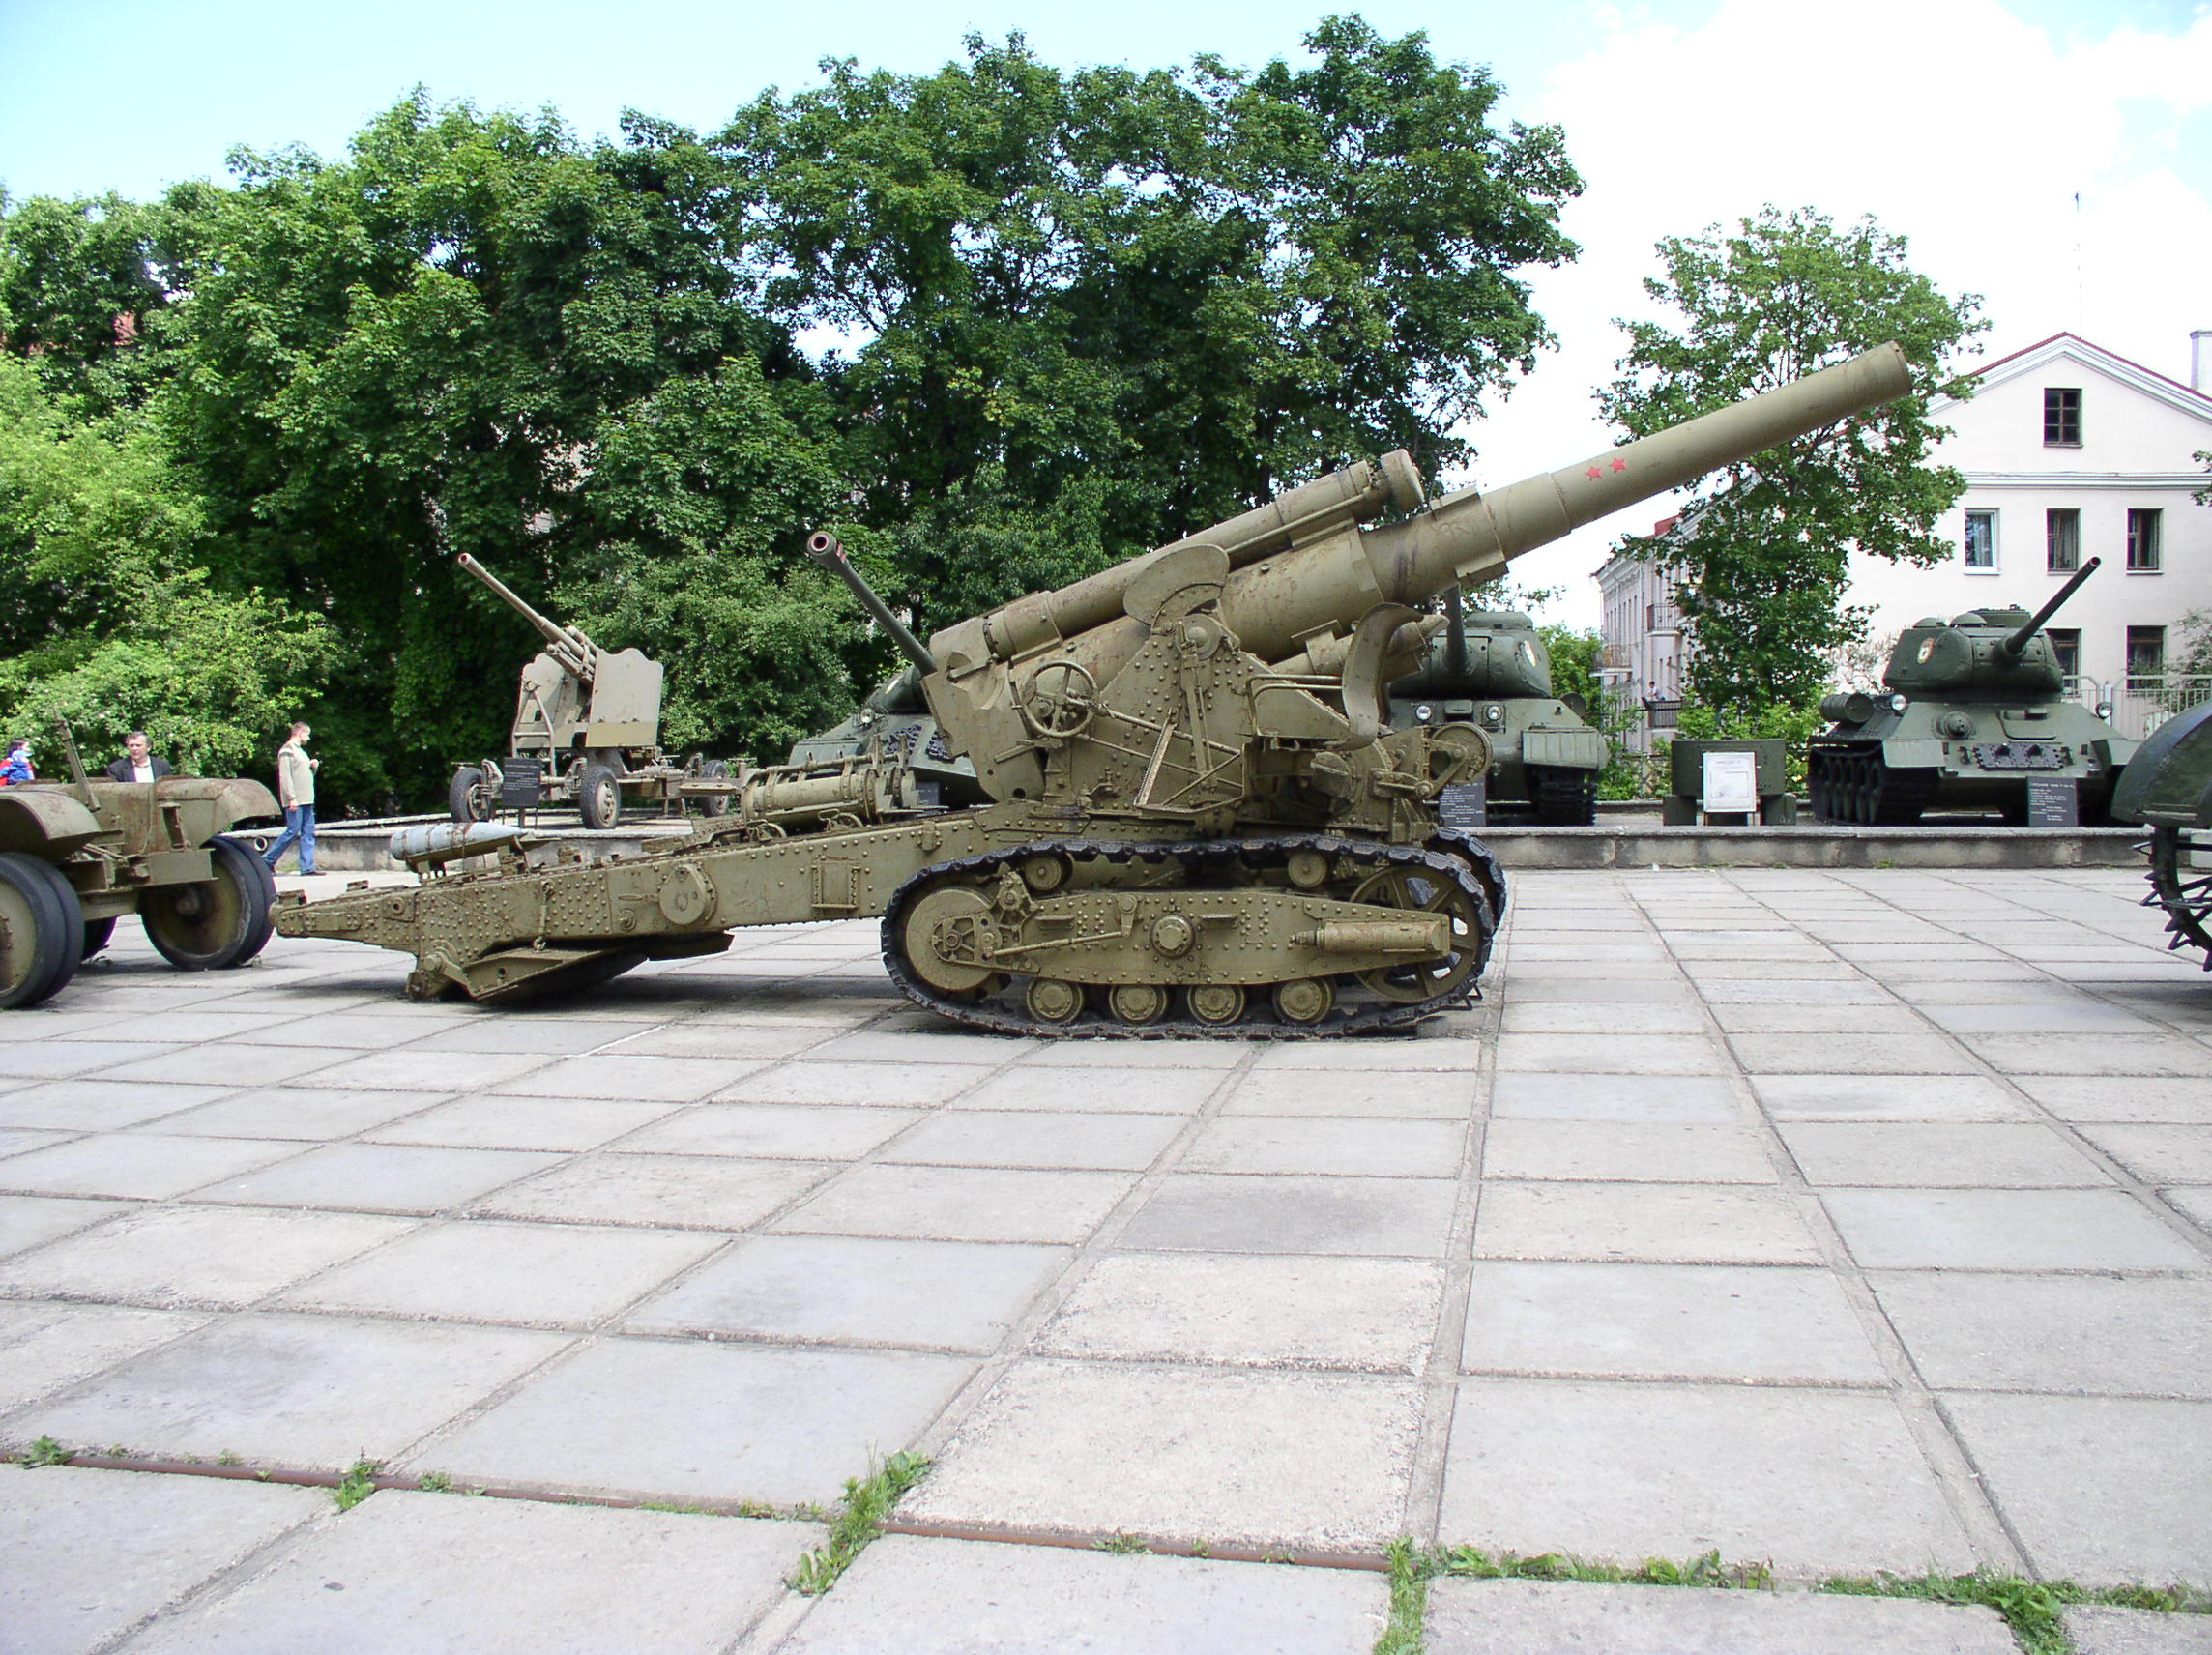 Soviet 203 mm Howitzer M1931 (B-4) field gun on display at Minsk, Belarus, 23 Jun 2005